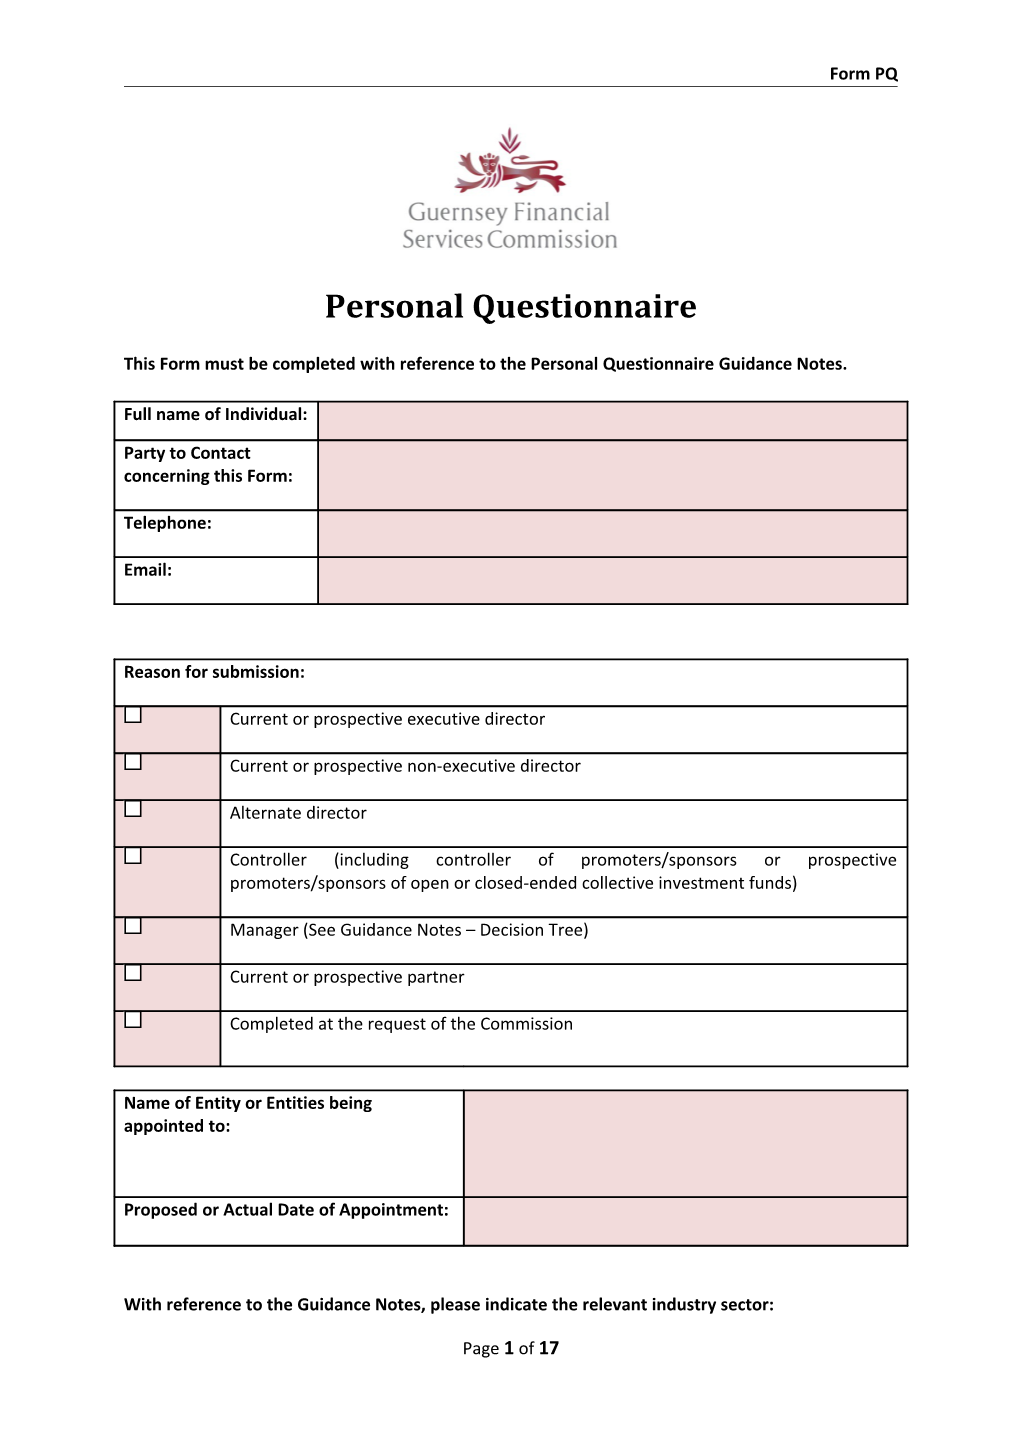 Personal Questionnaire